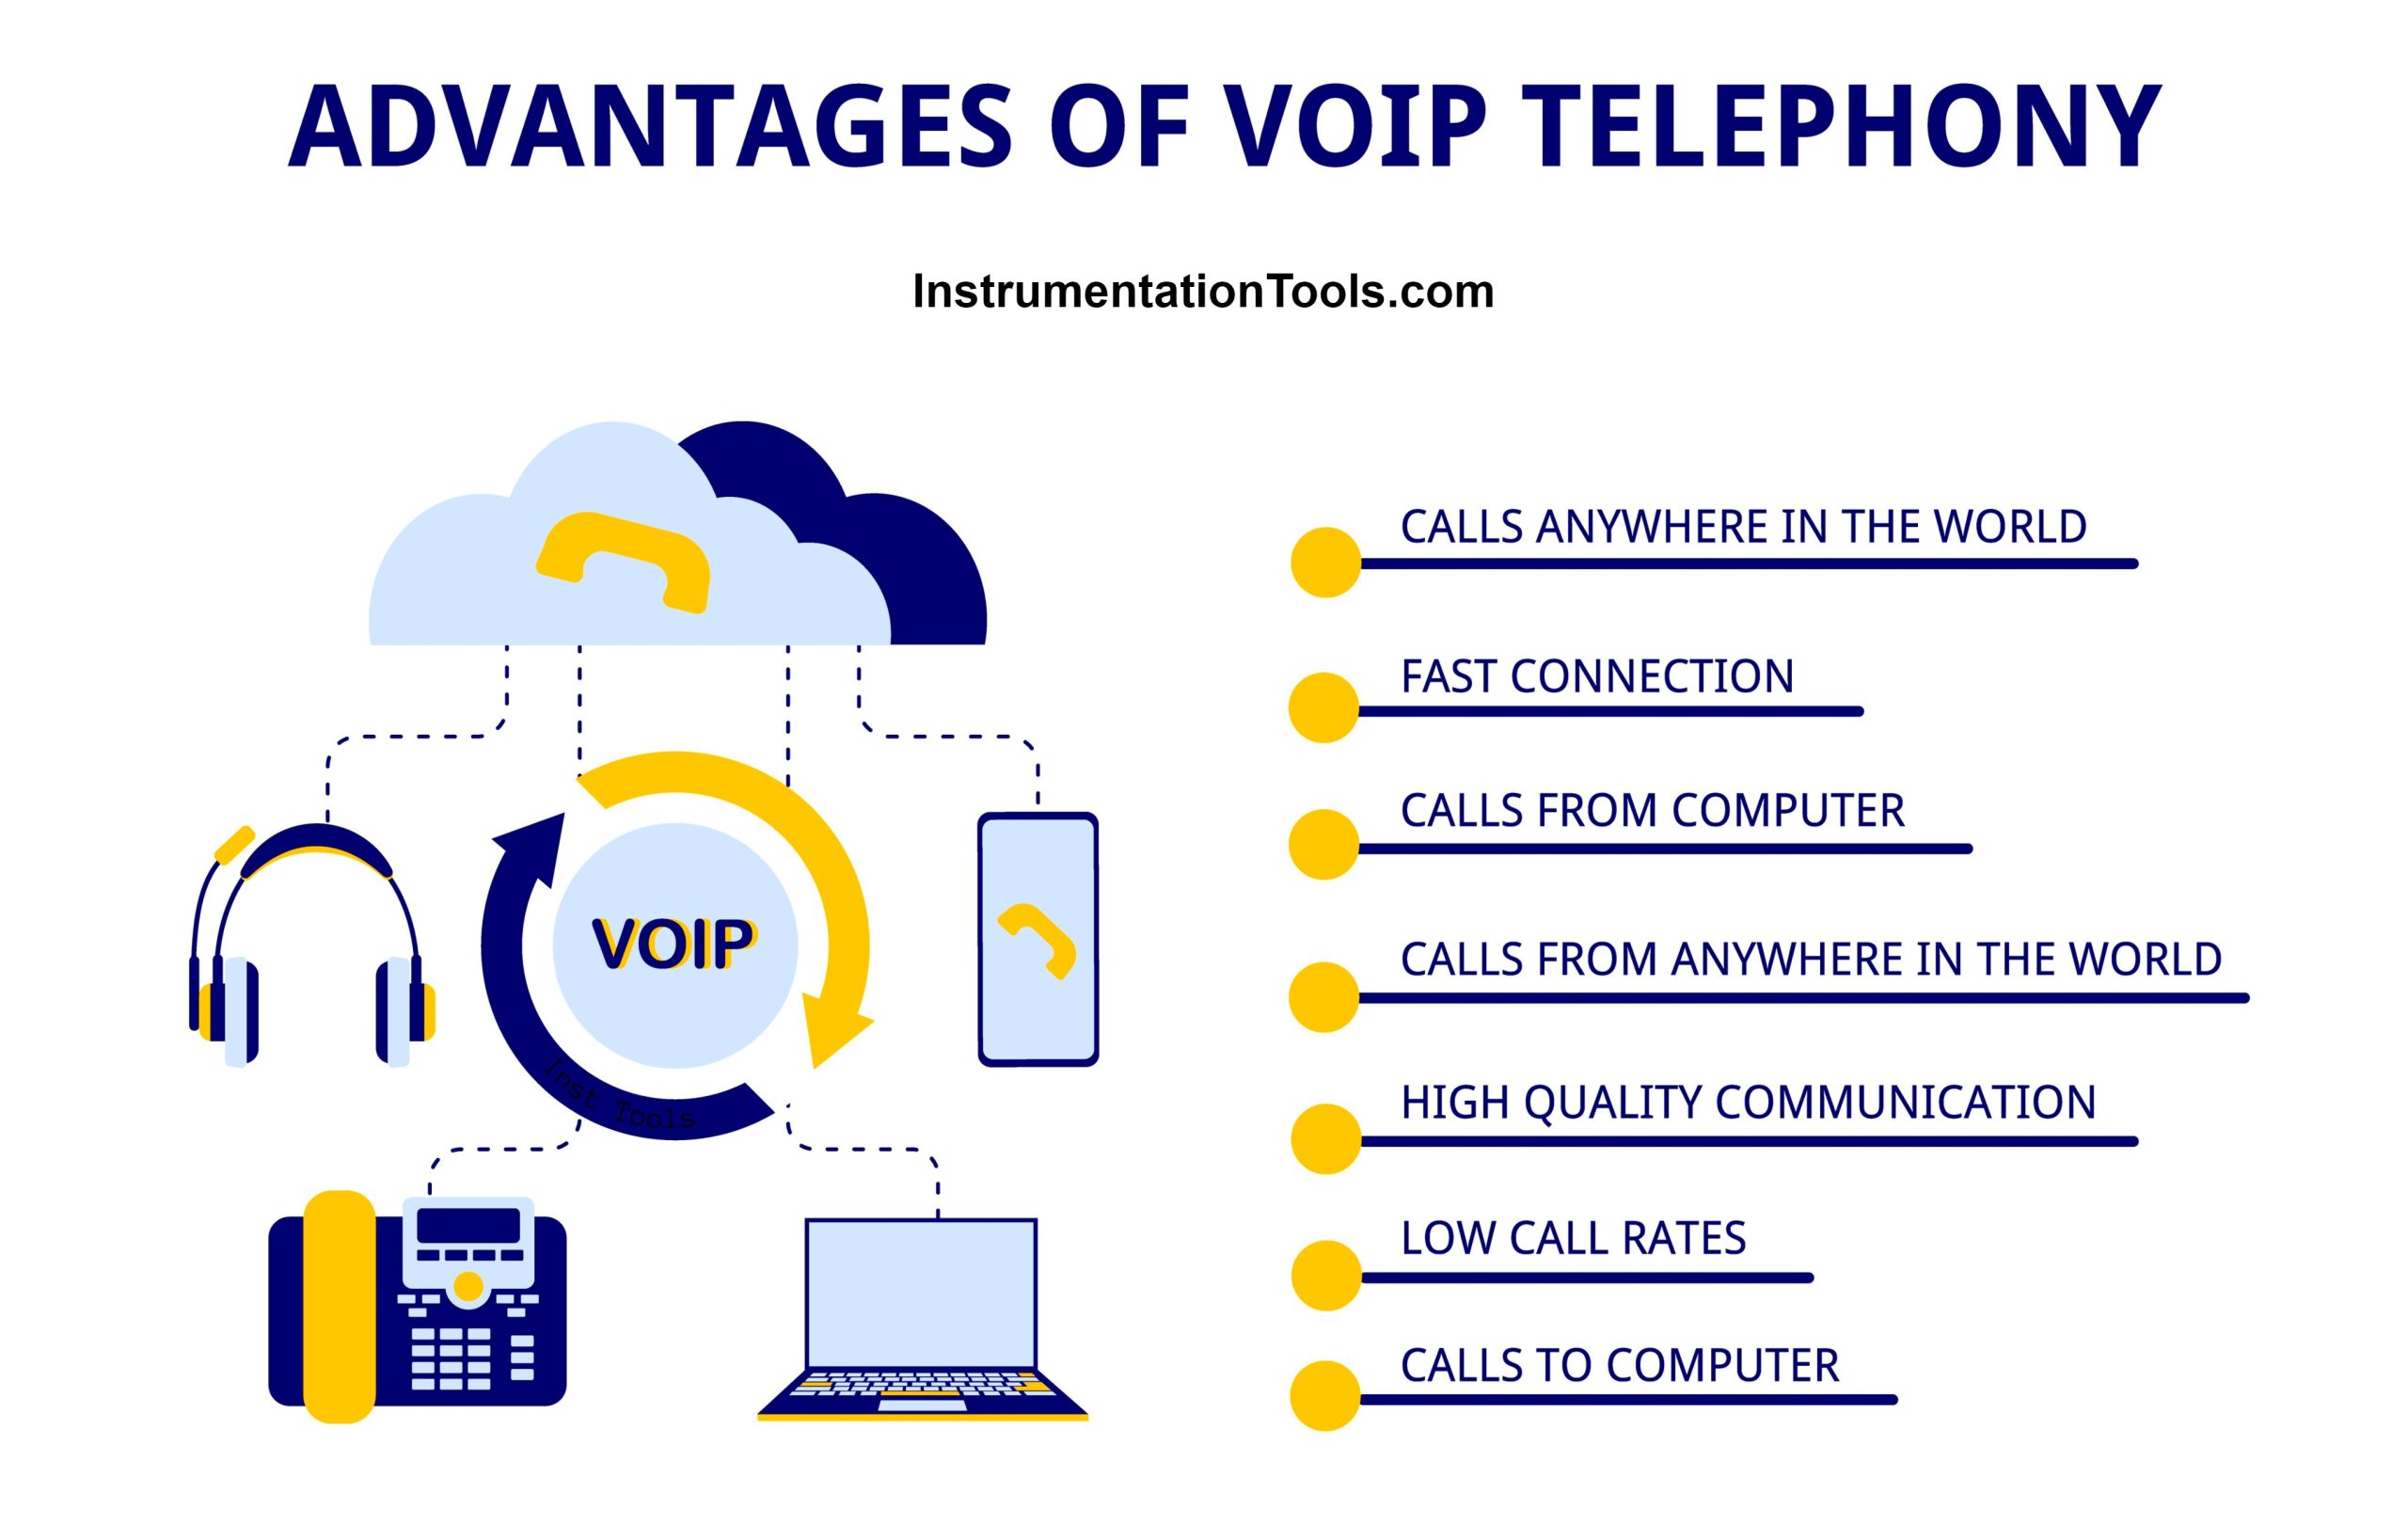 Advantages of VoIP technology